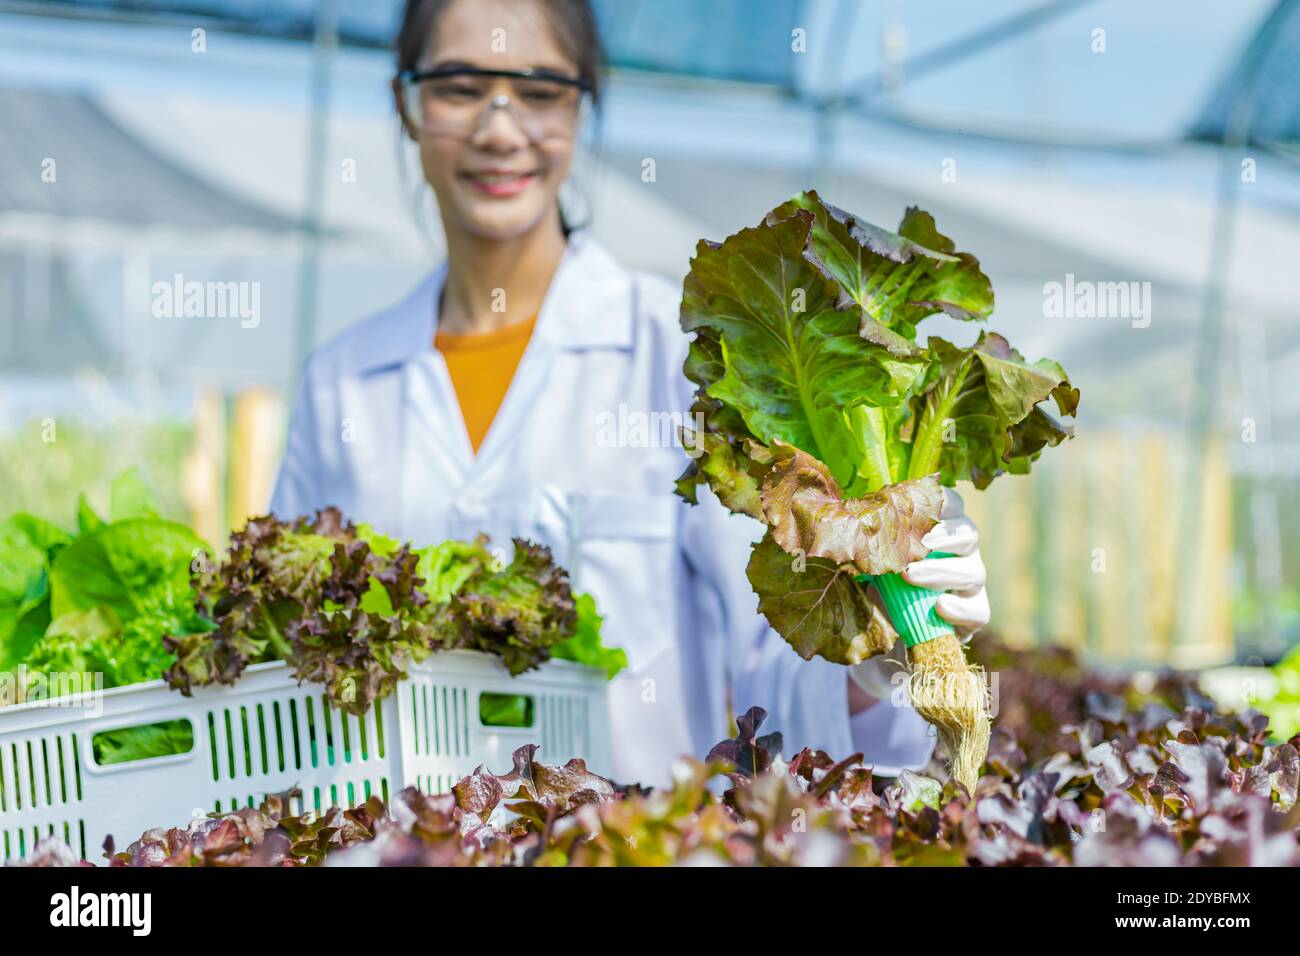 Smiling Botanist Holding Vegetables At Greenhouse Stock Photo